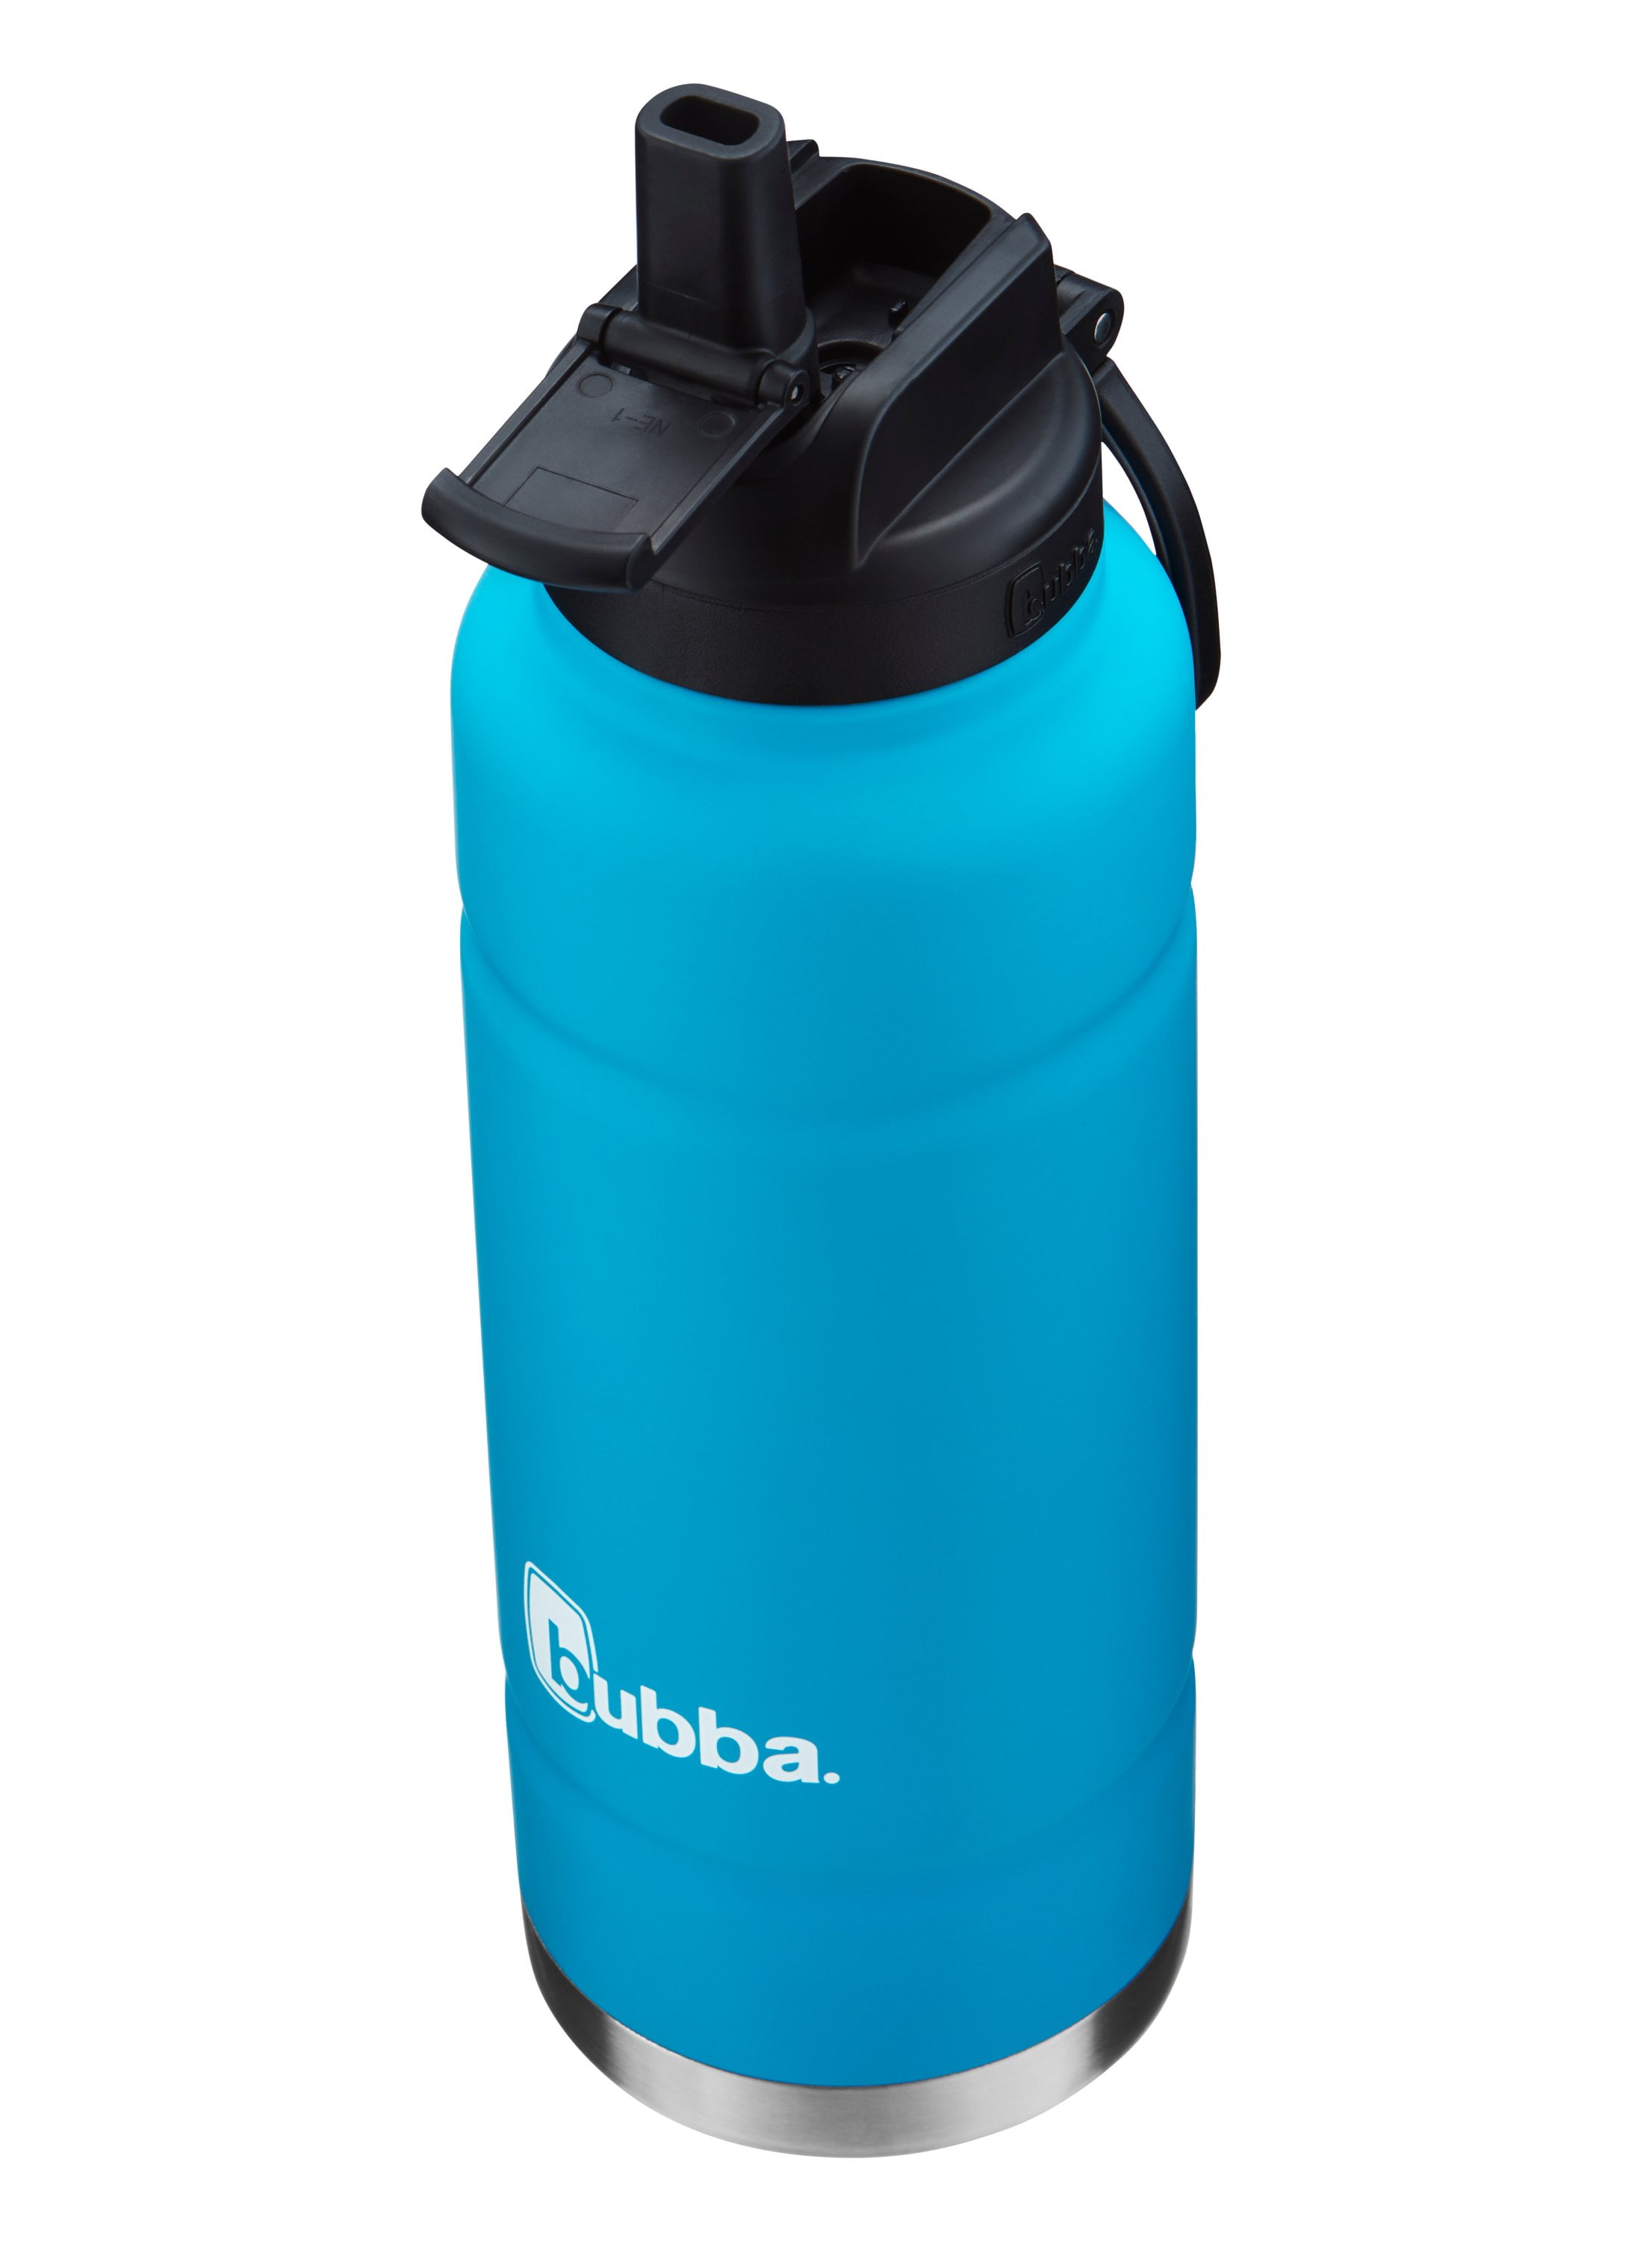 Bubba Stainless Steel Trailblazer Water Bottle with Straw, Rubberized Blue, 40 oz